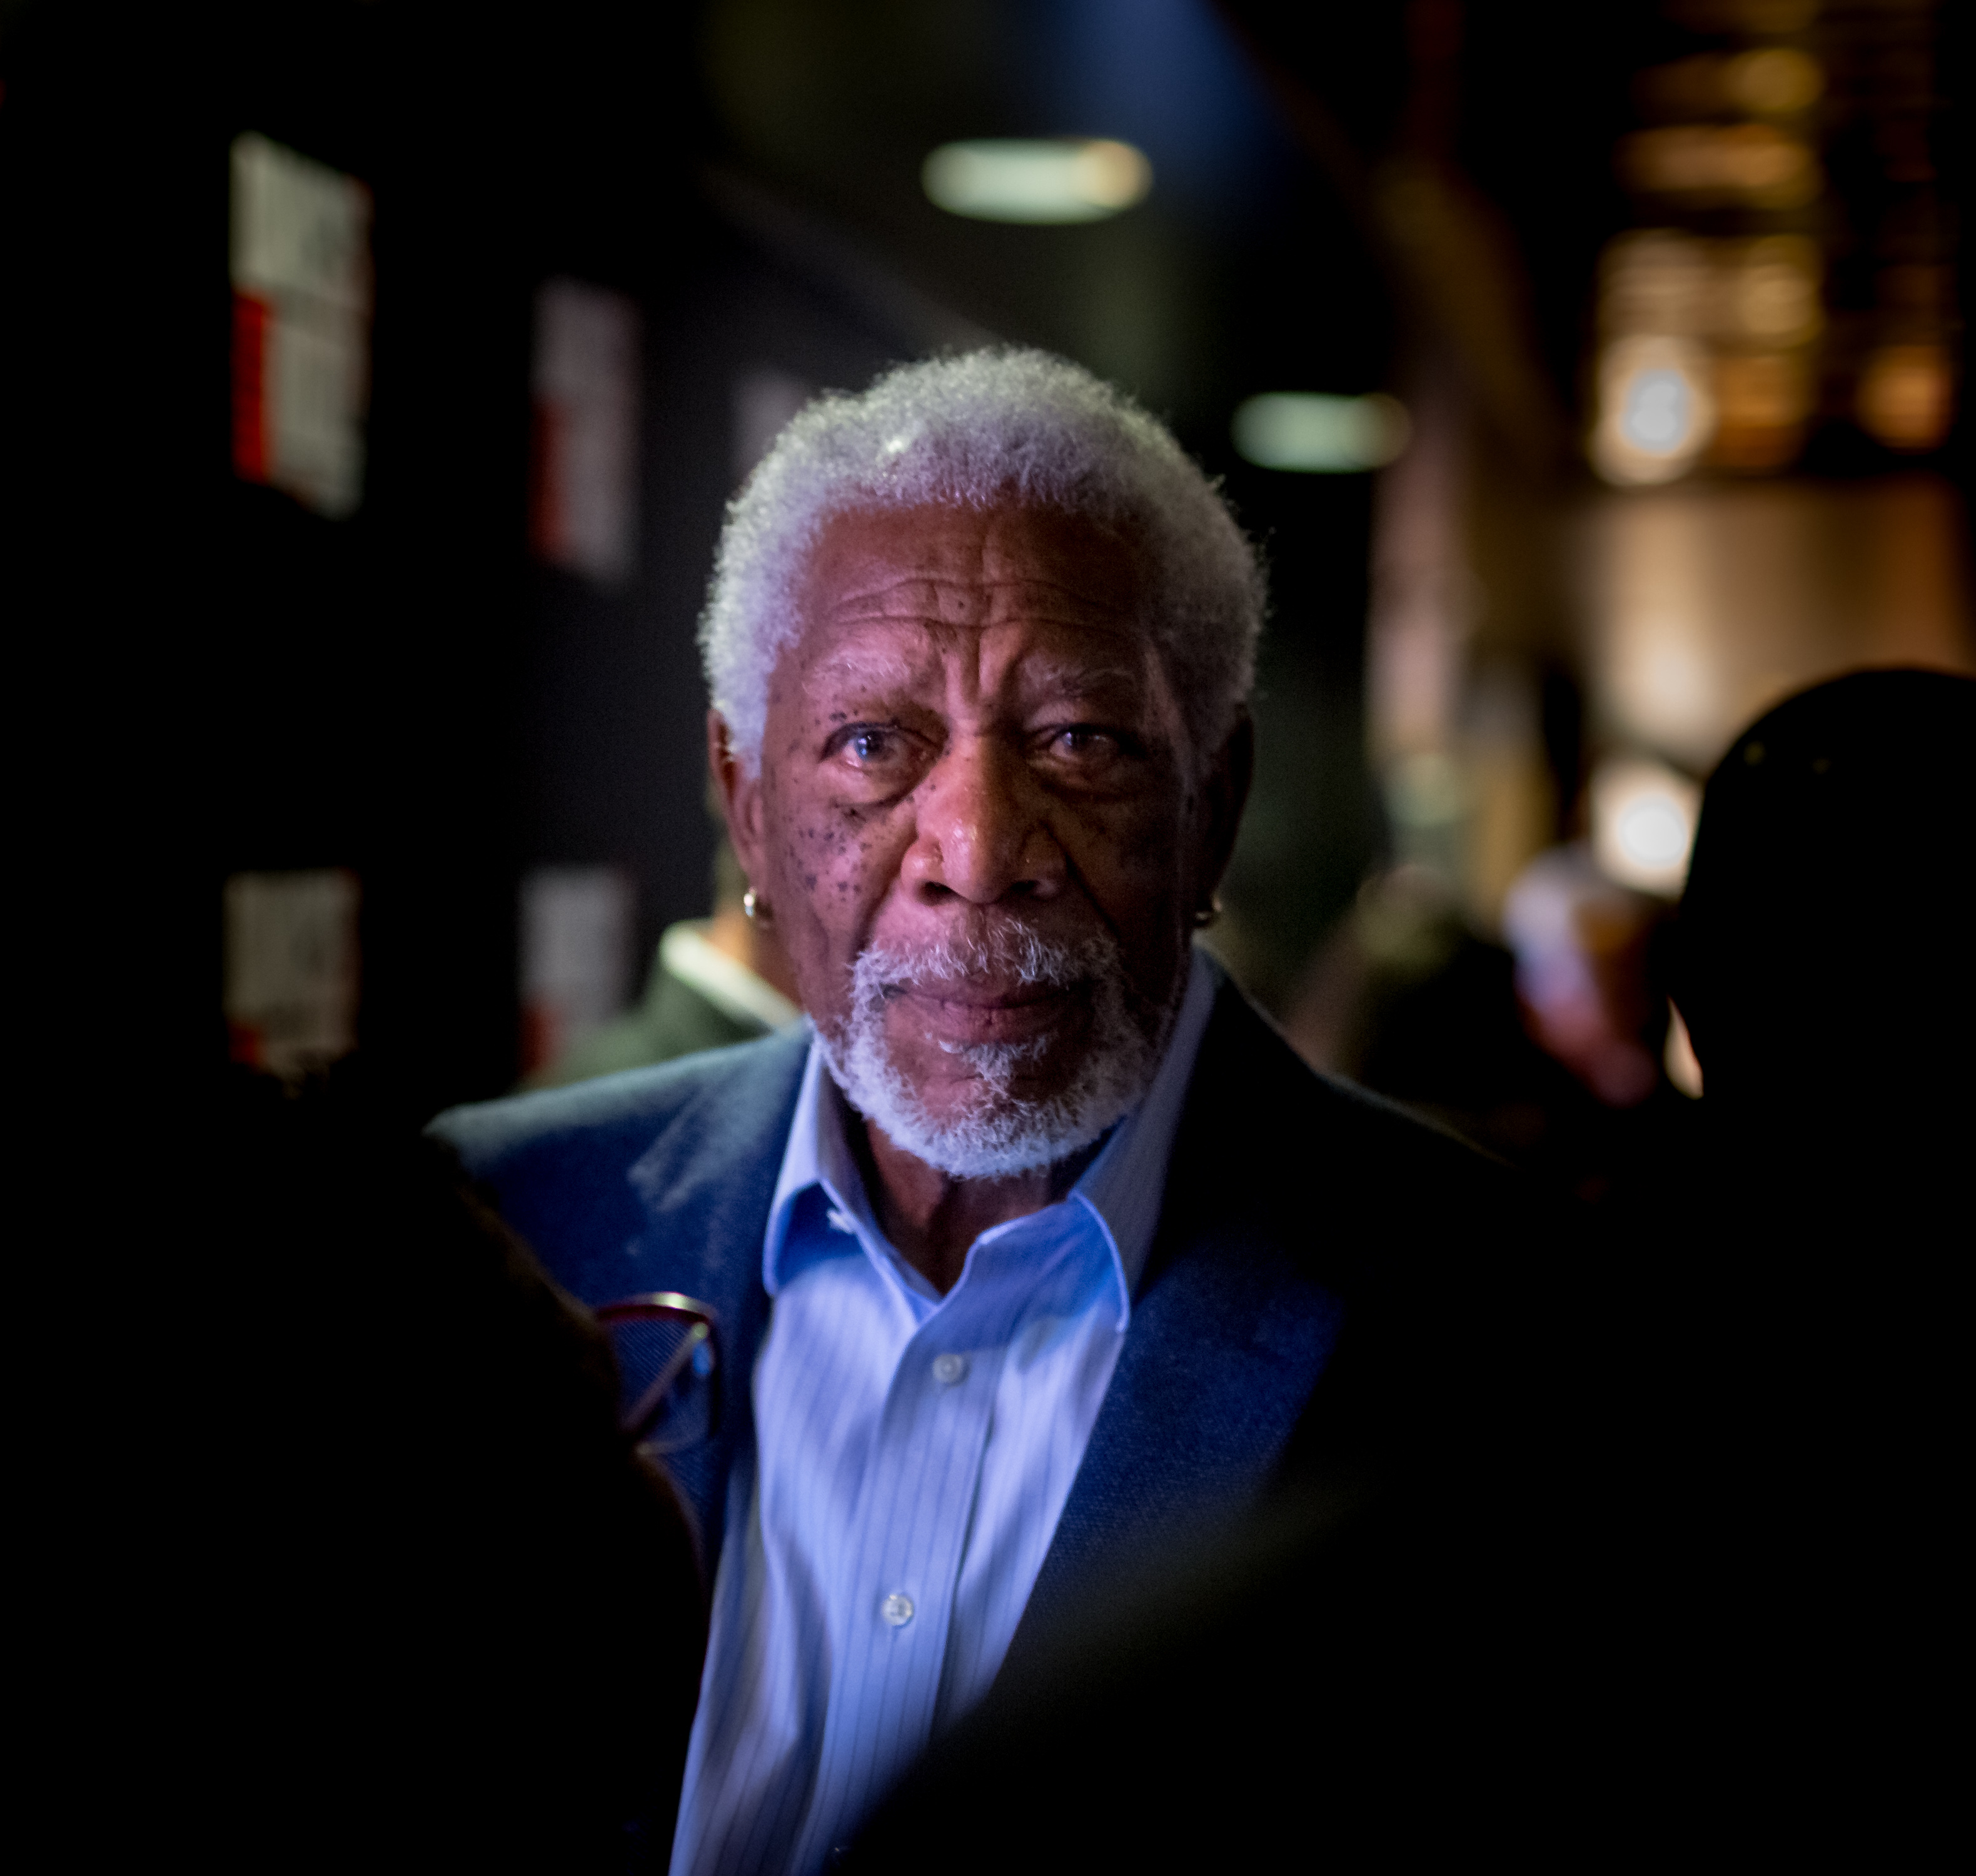 Morgan Freeman in California in 2017 | Source: Getty Images